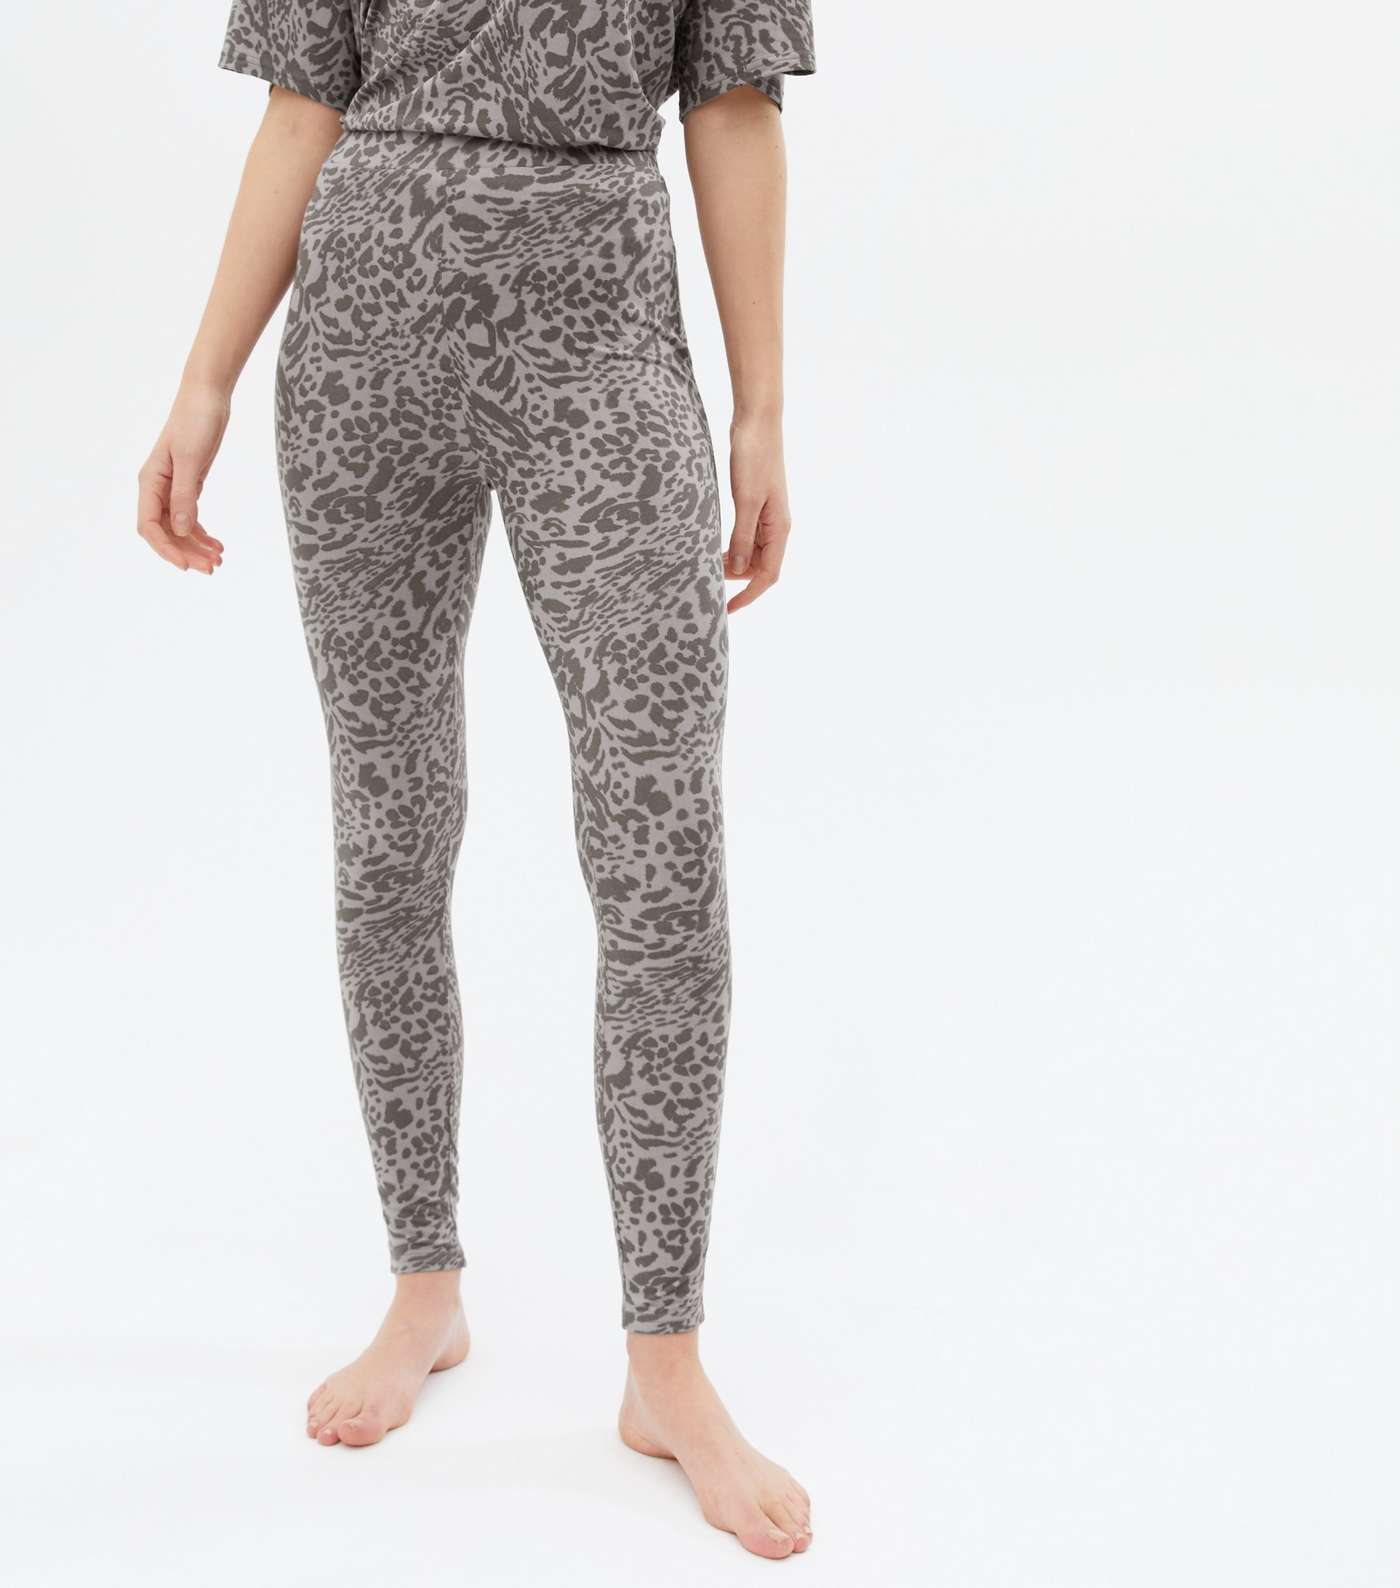 Grey Soft Touch Legging Pyjama Set with Animal Print Image 3